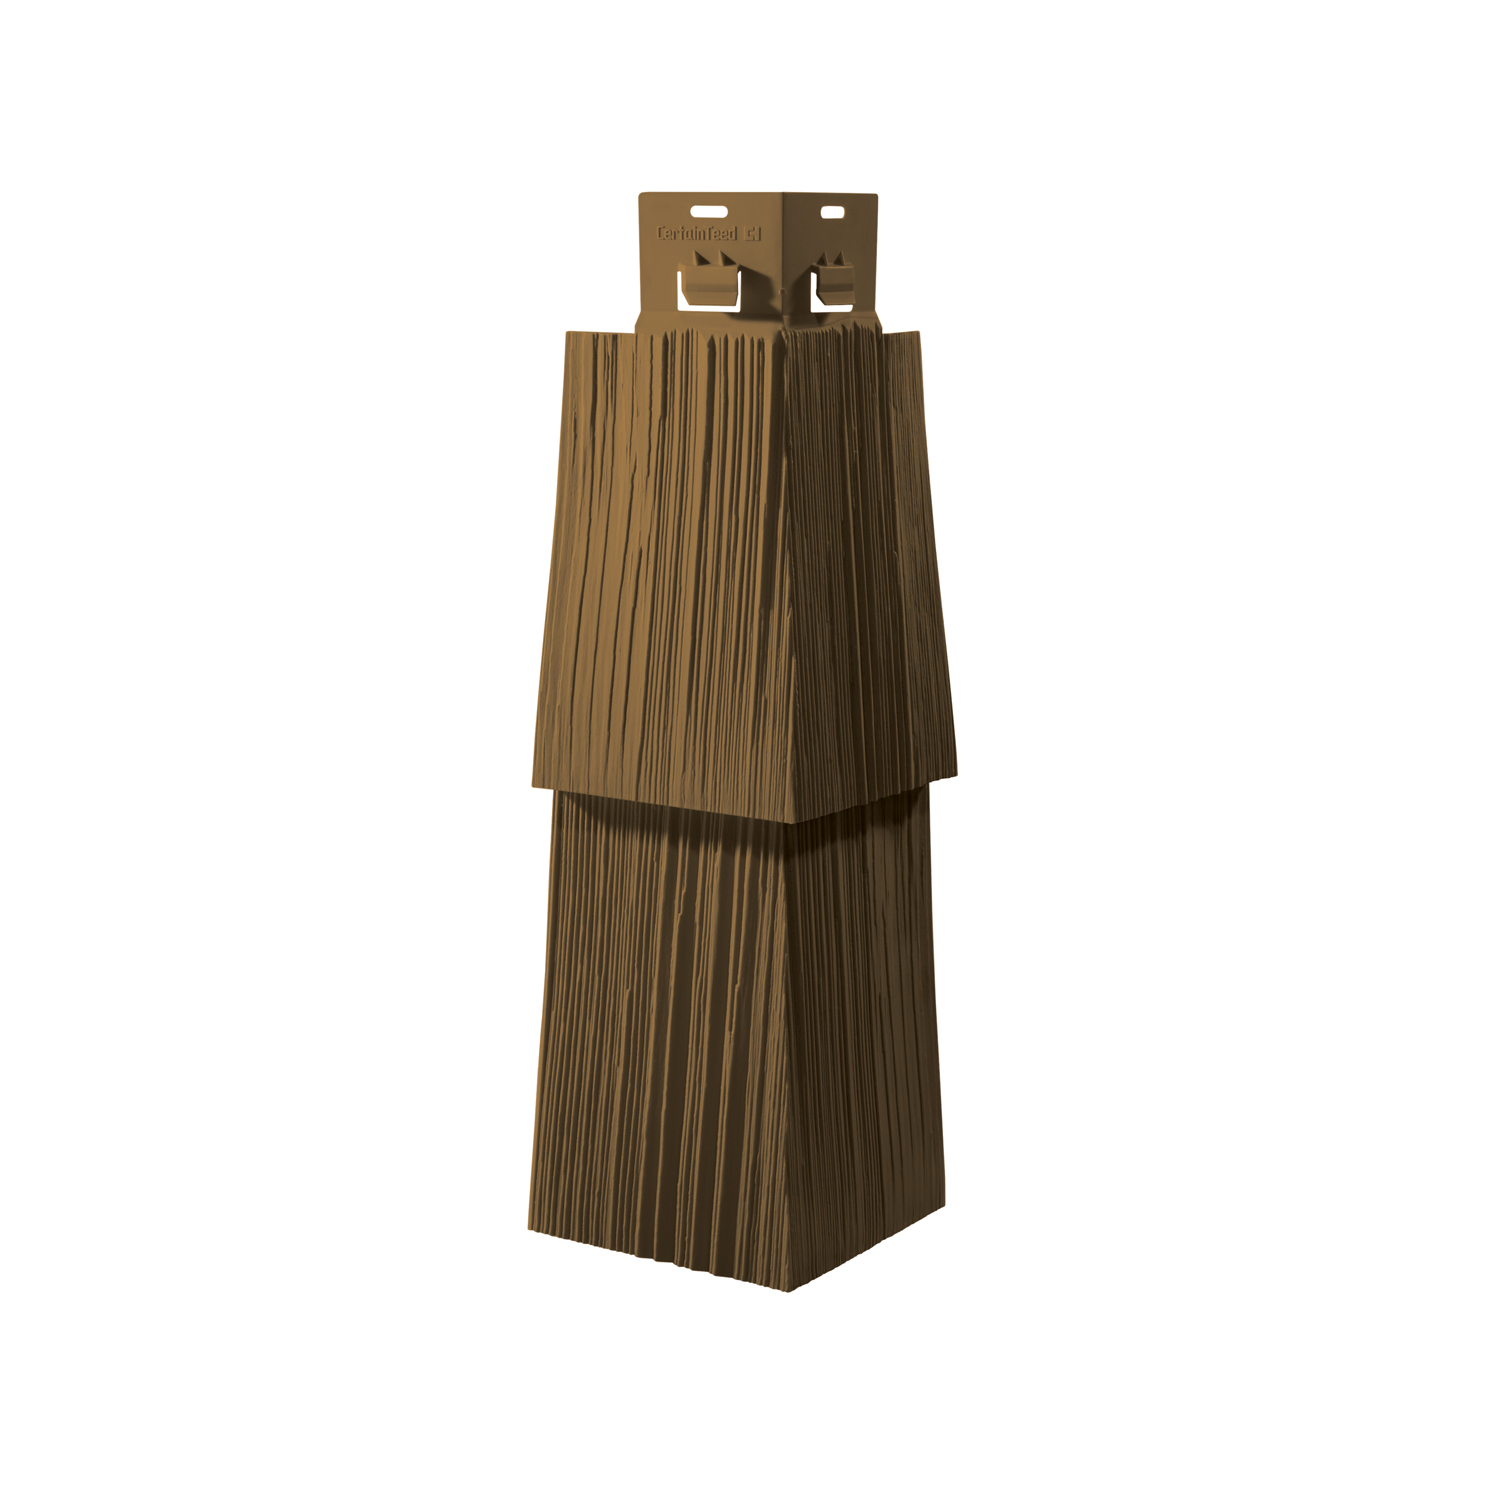 Product Mountain Cedar - Single Box